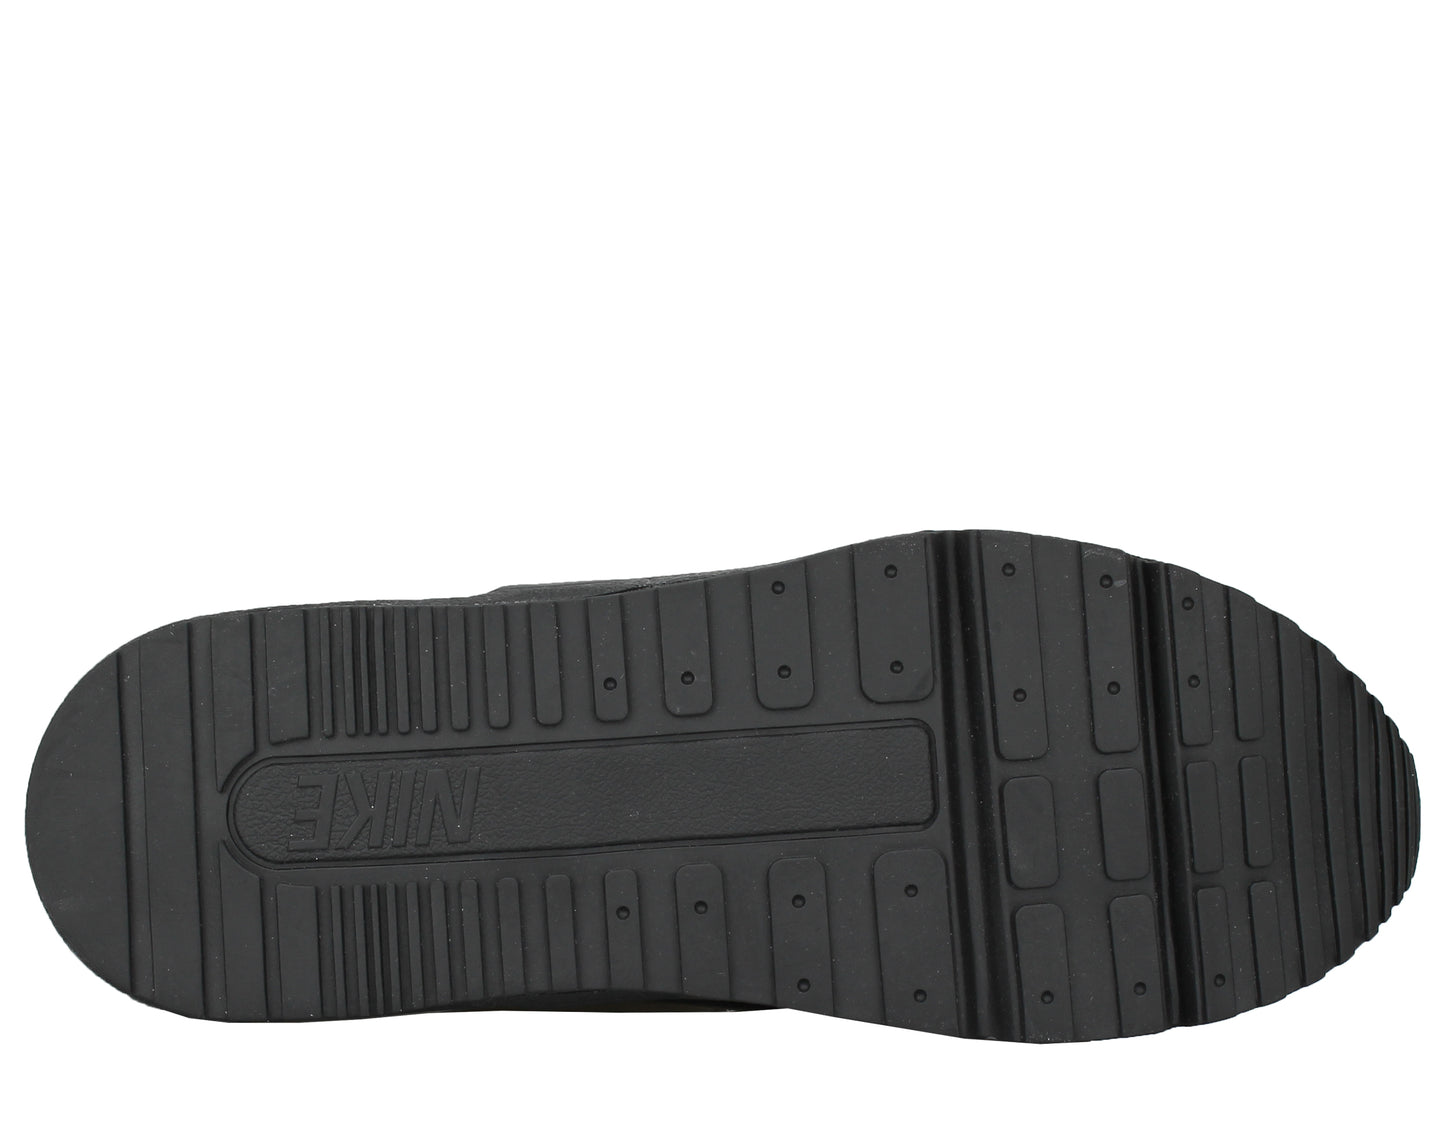 Nike Air Max LTD 3 Black/Black Men's Running Shoes 687977-020